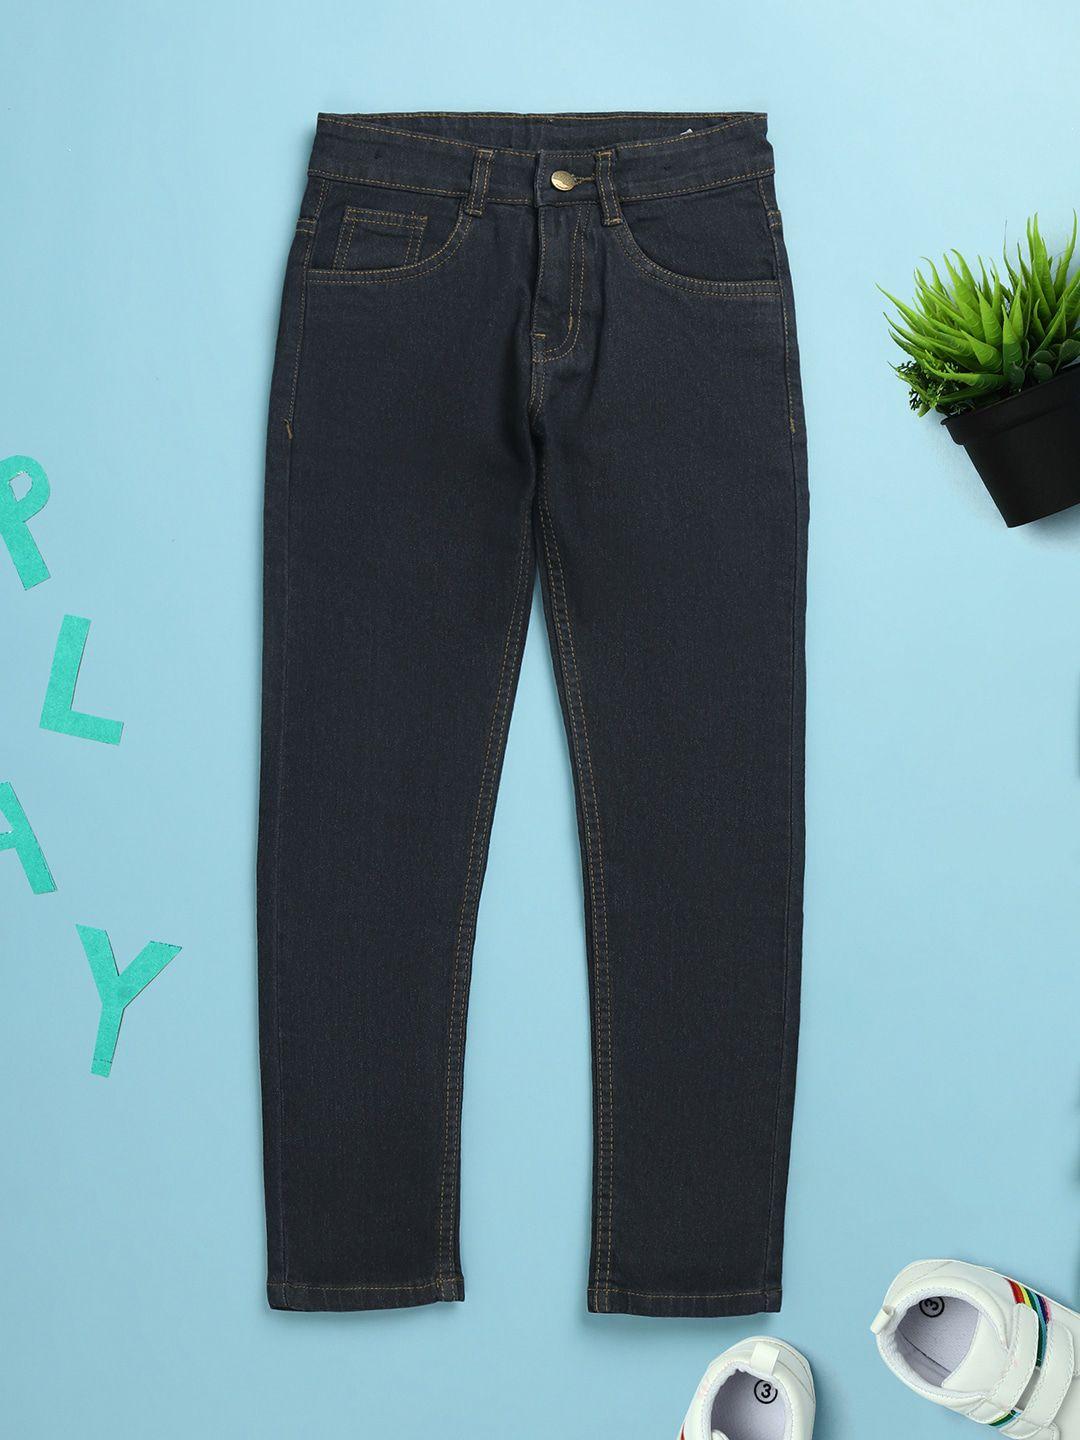 v-mart-boys-clean-look-cotton-jeans